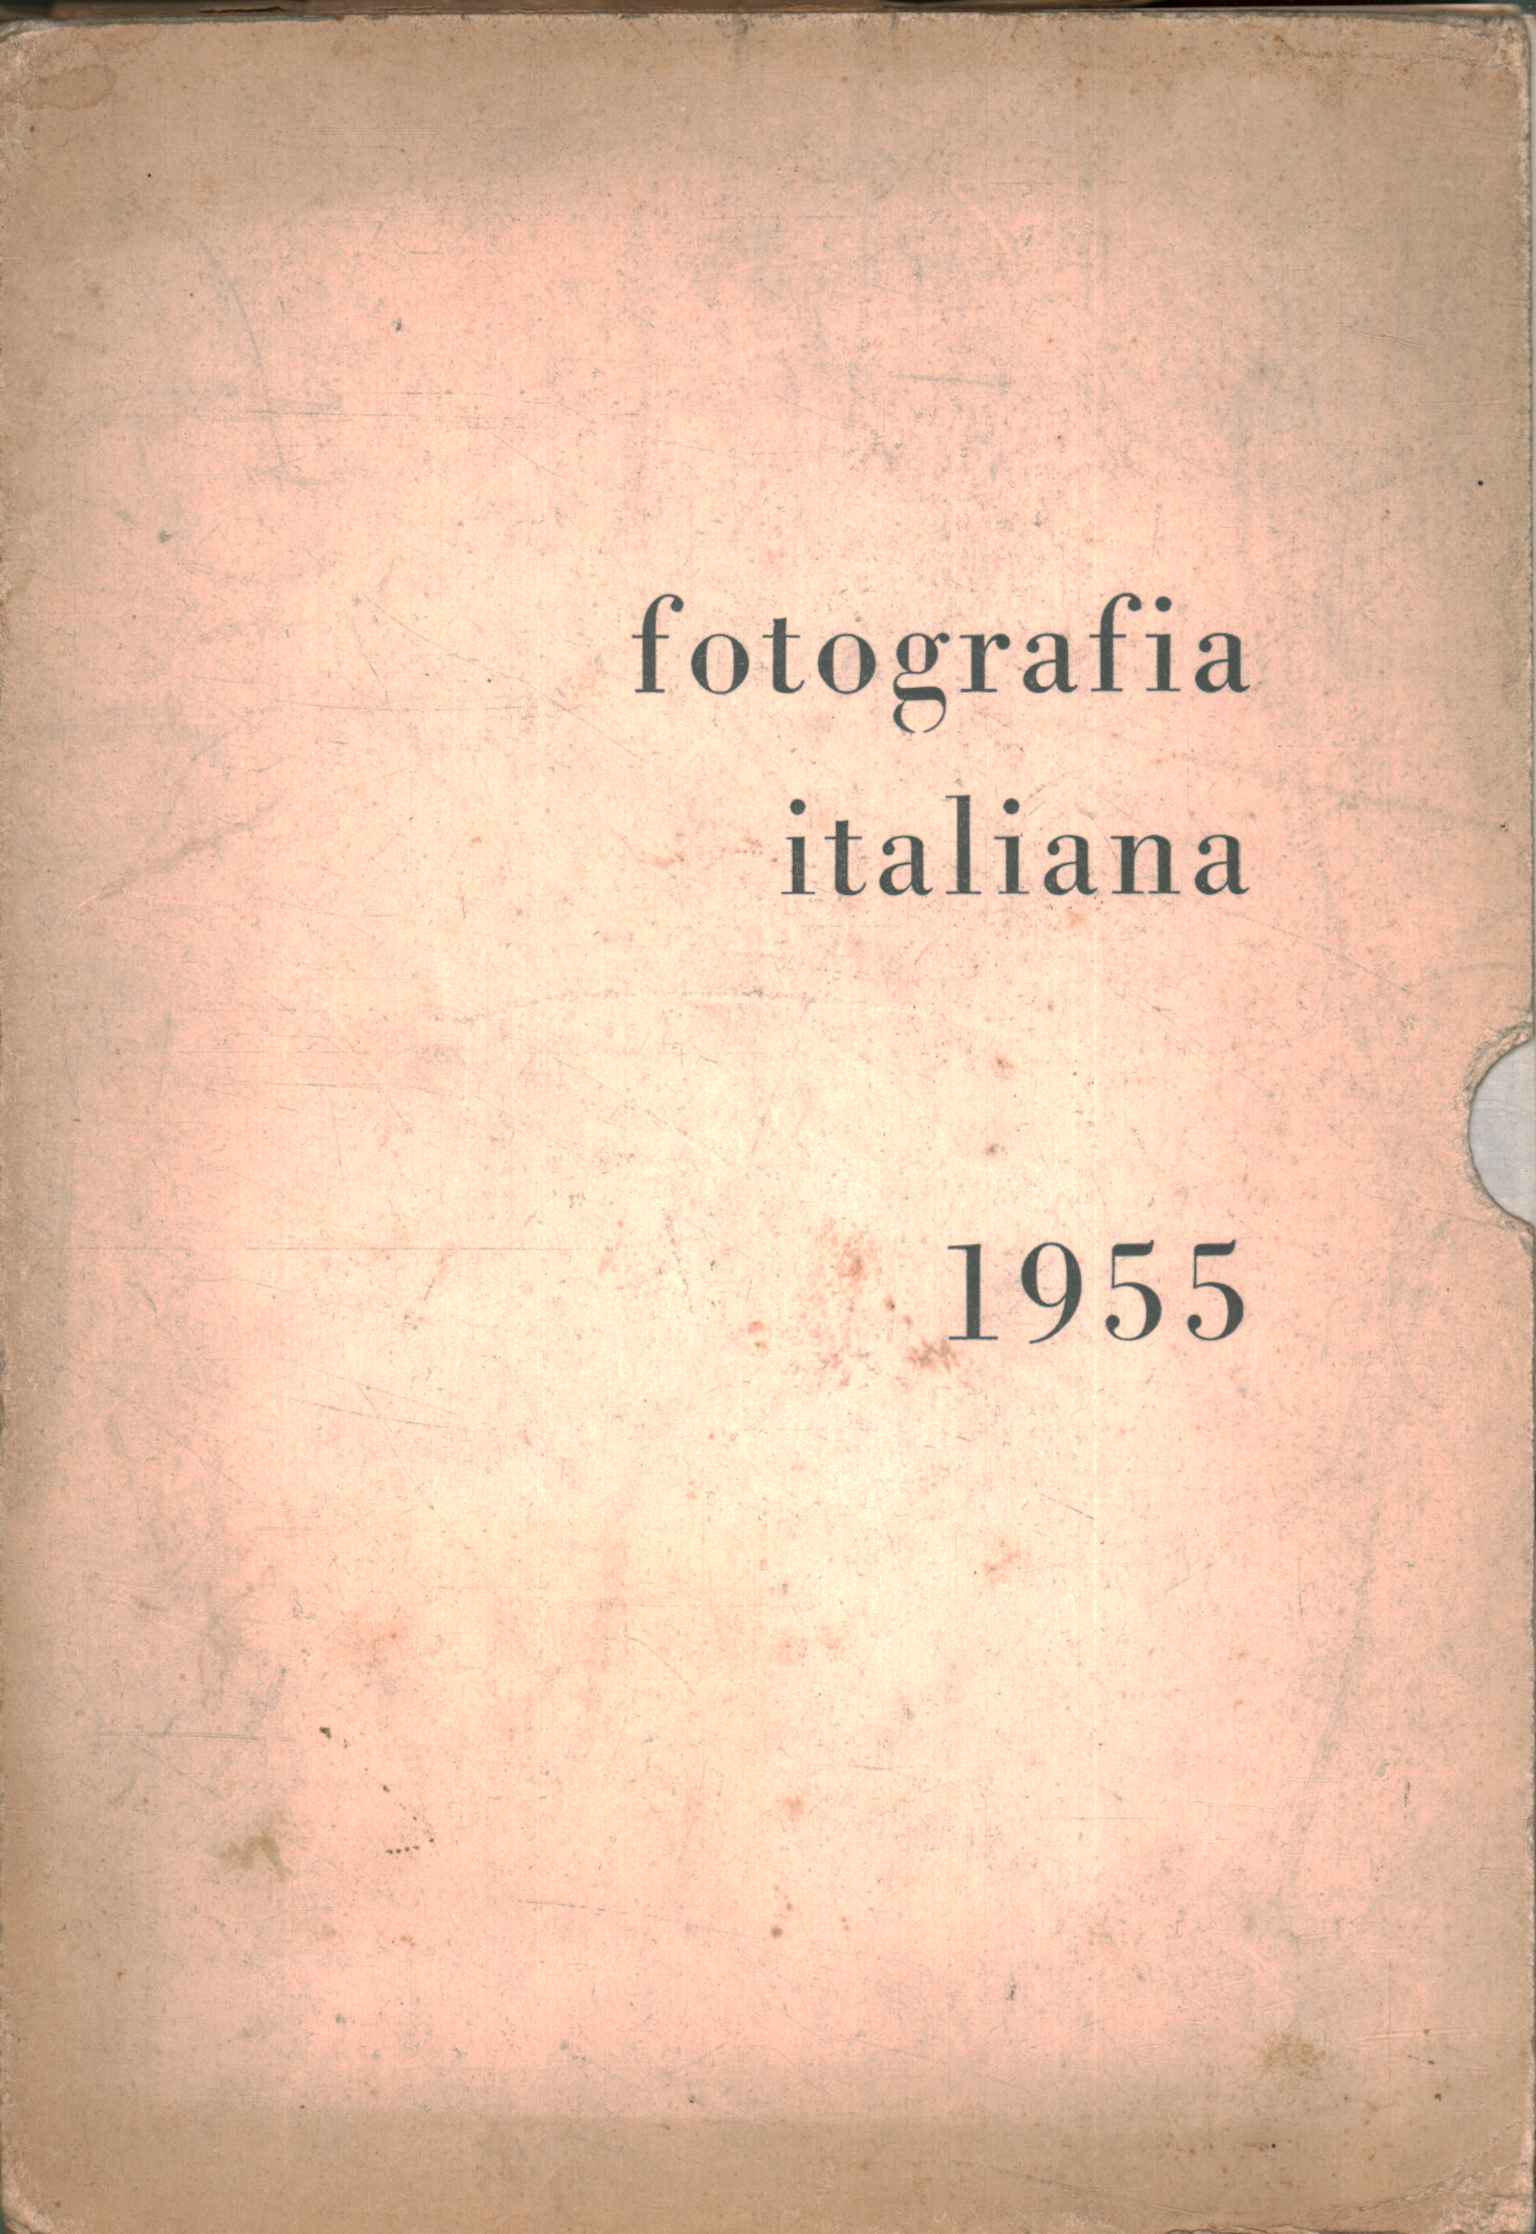 Fotografia italiana 1955